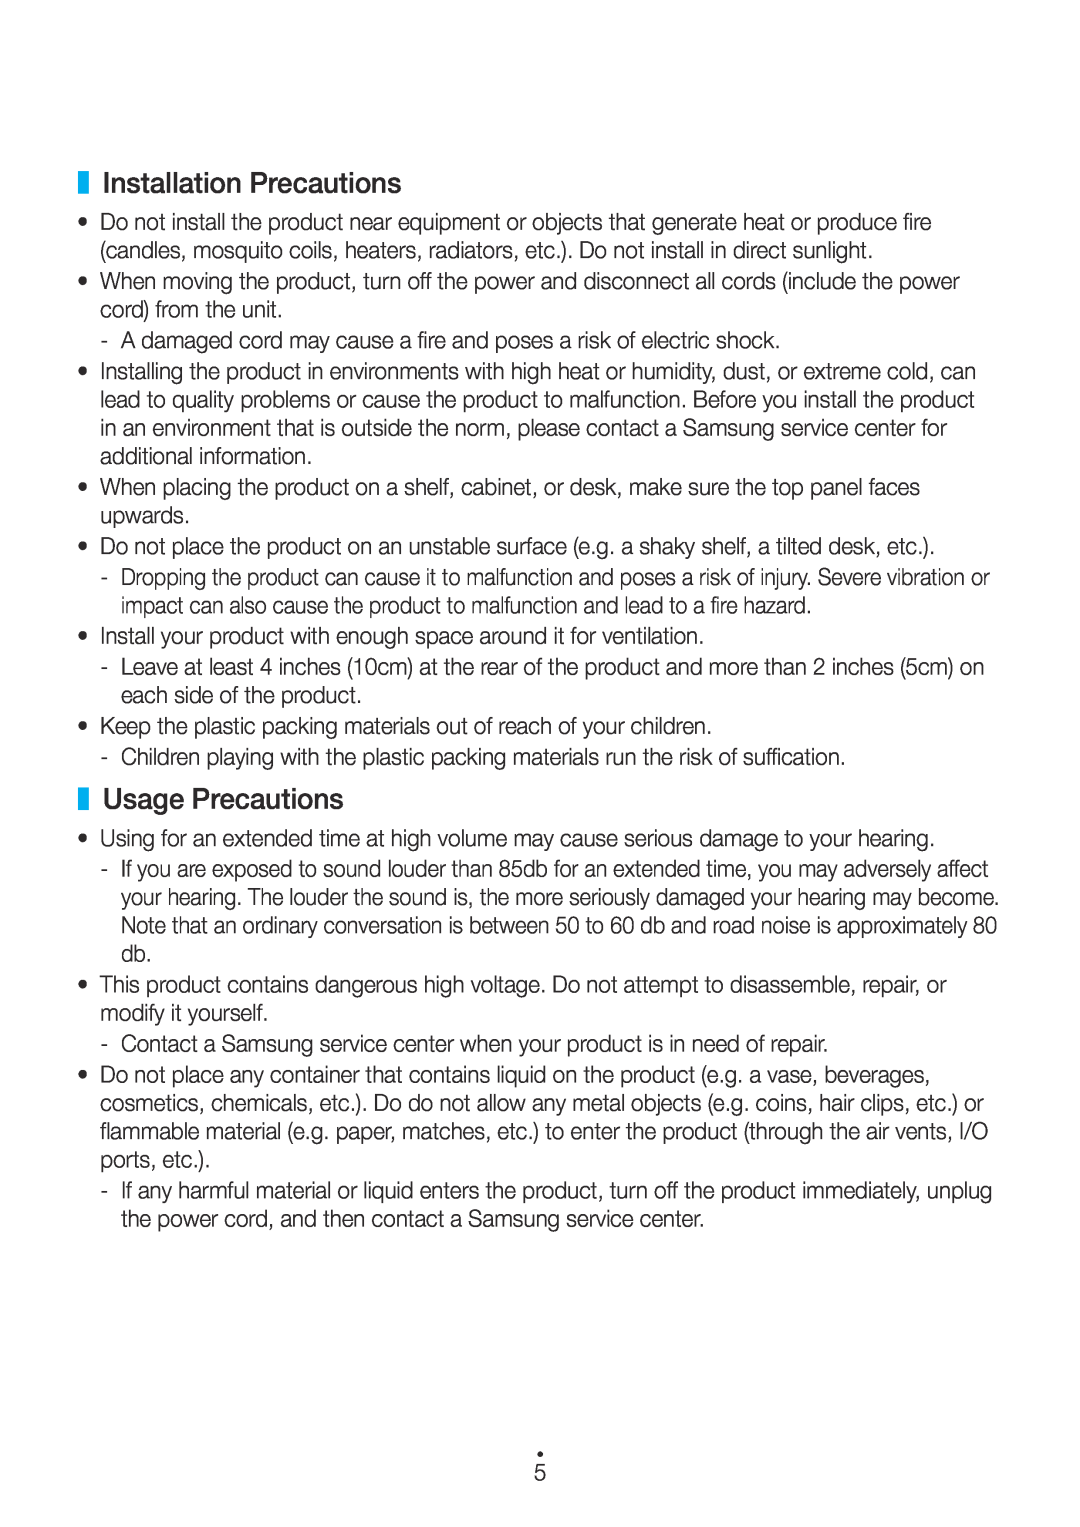 Samsung M5 user manual Installation Precautions, Usage Precautions 